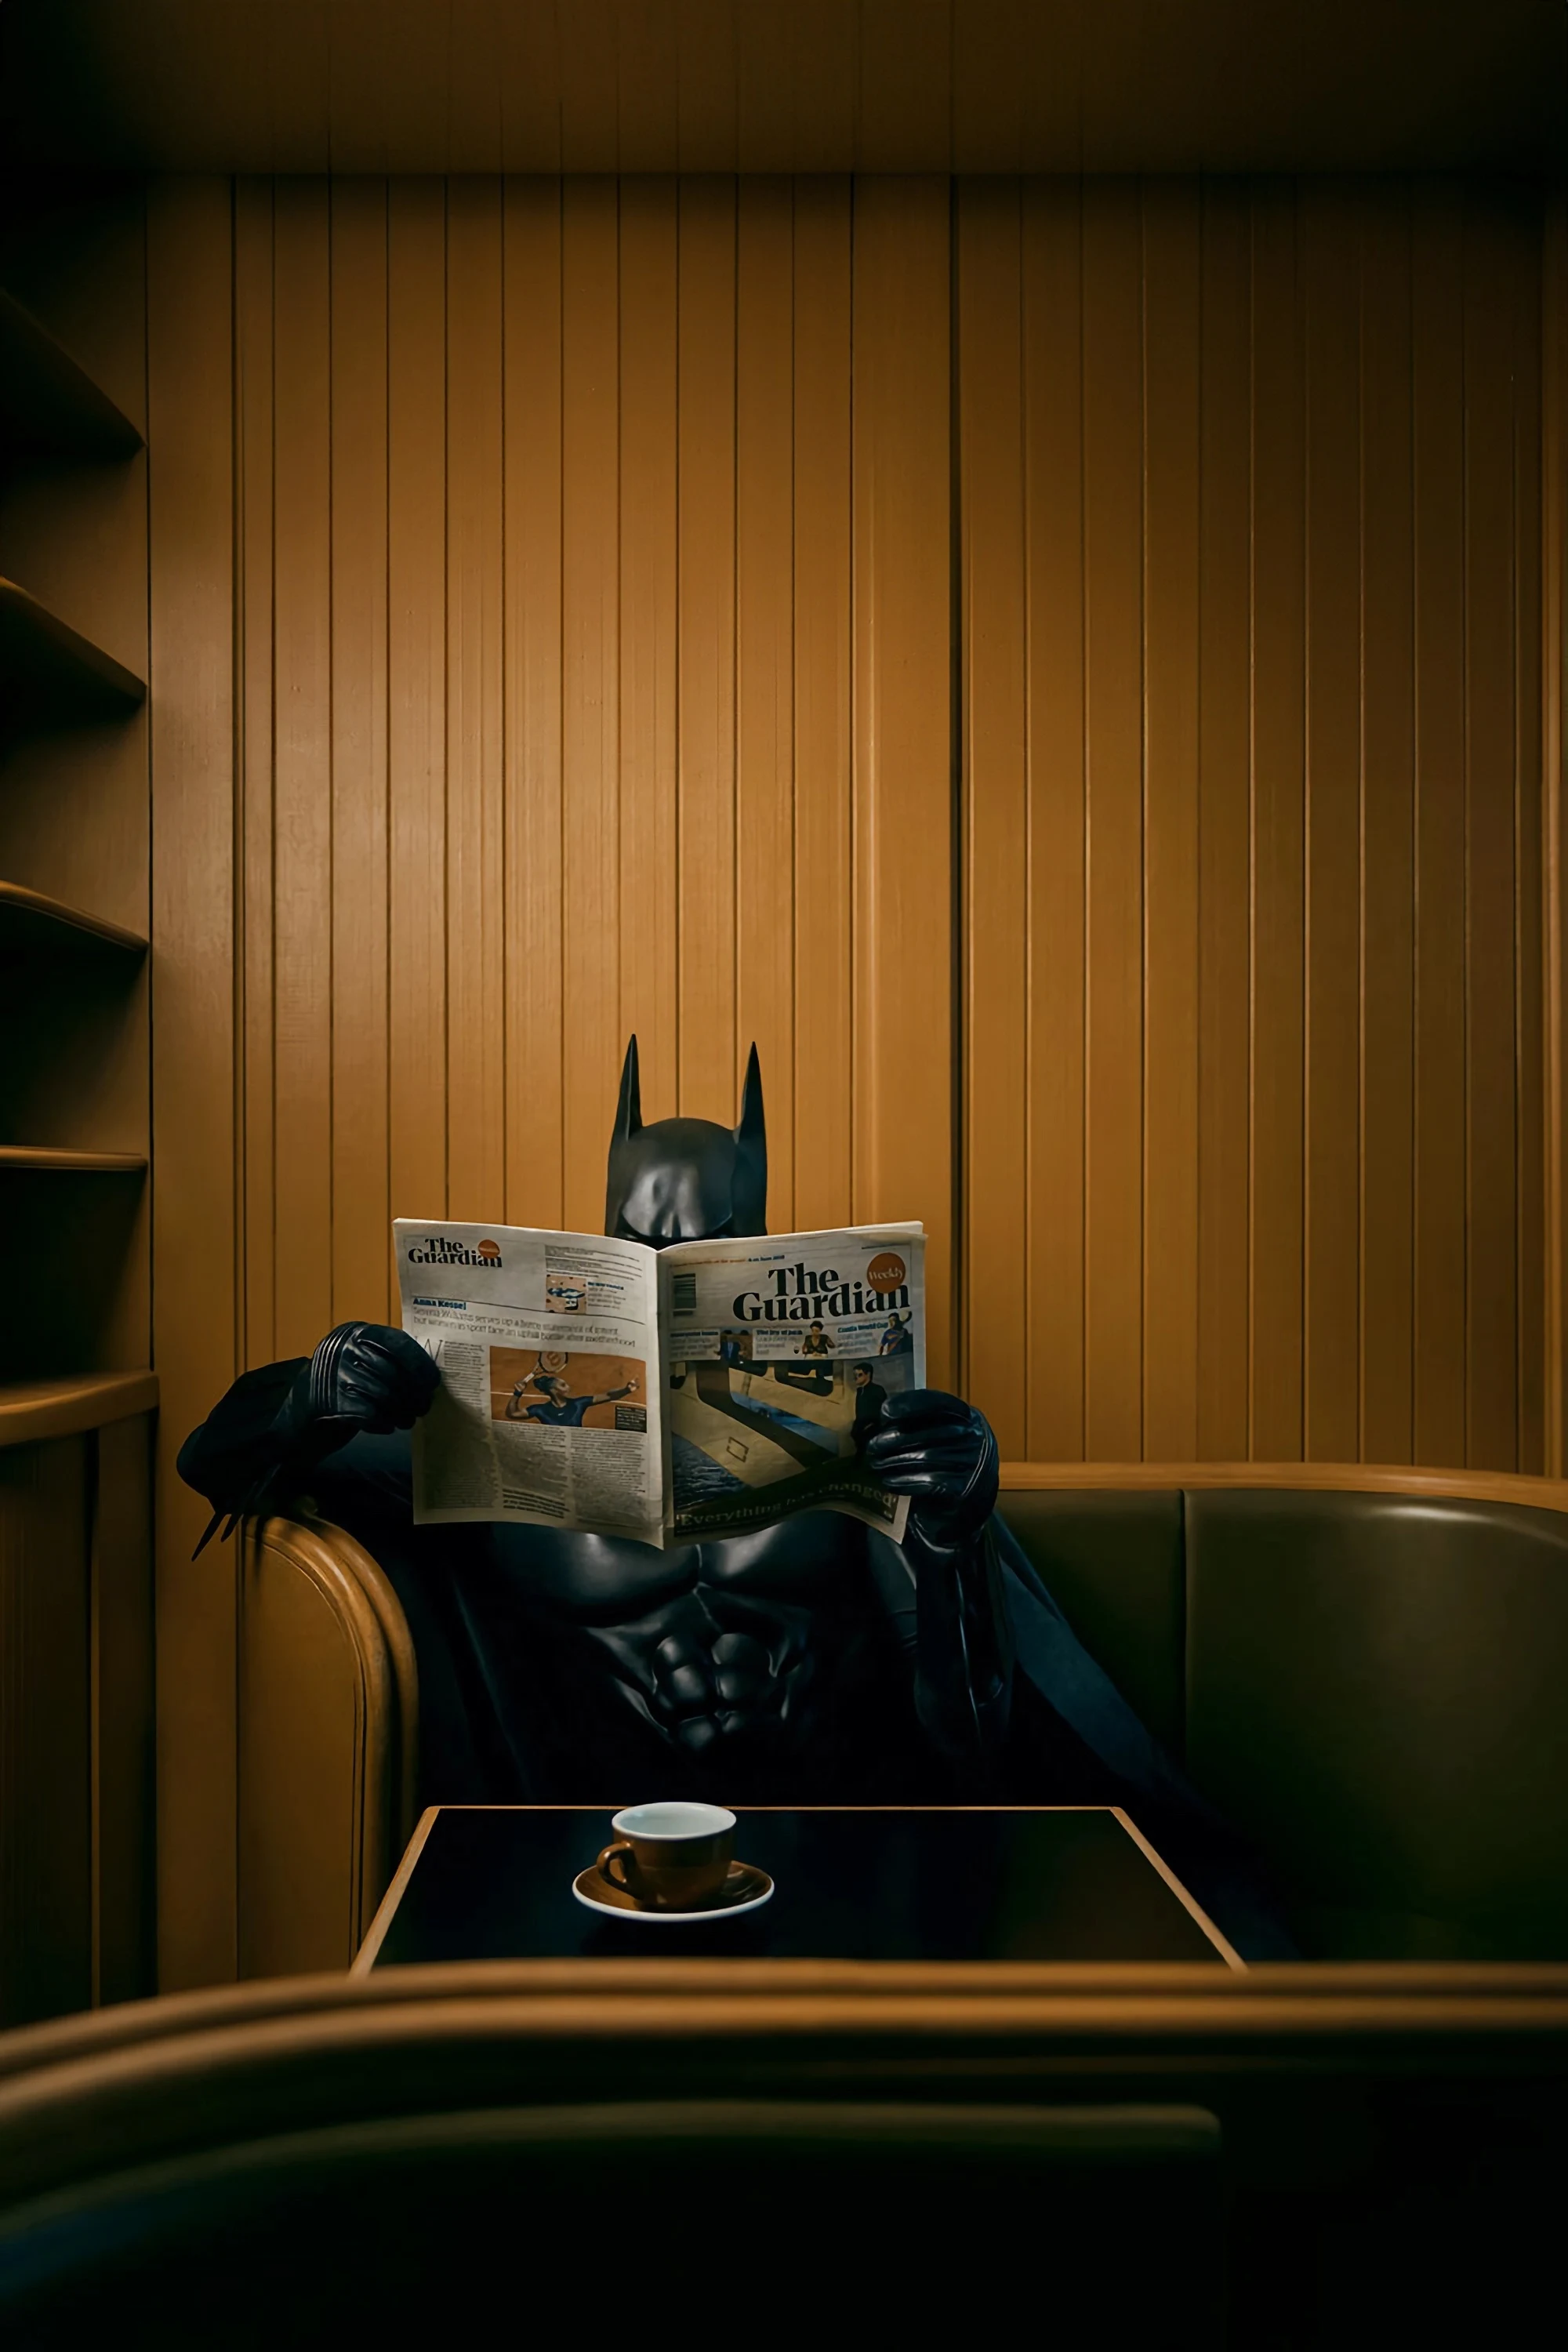 BATMAN READING NEWSPAPER